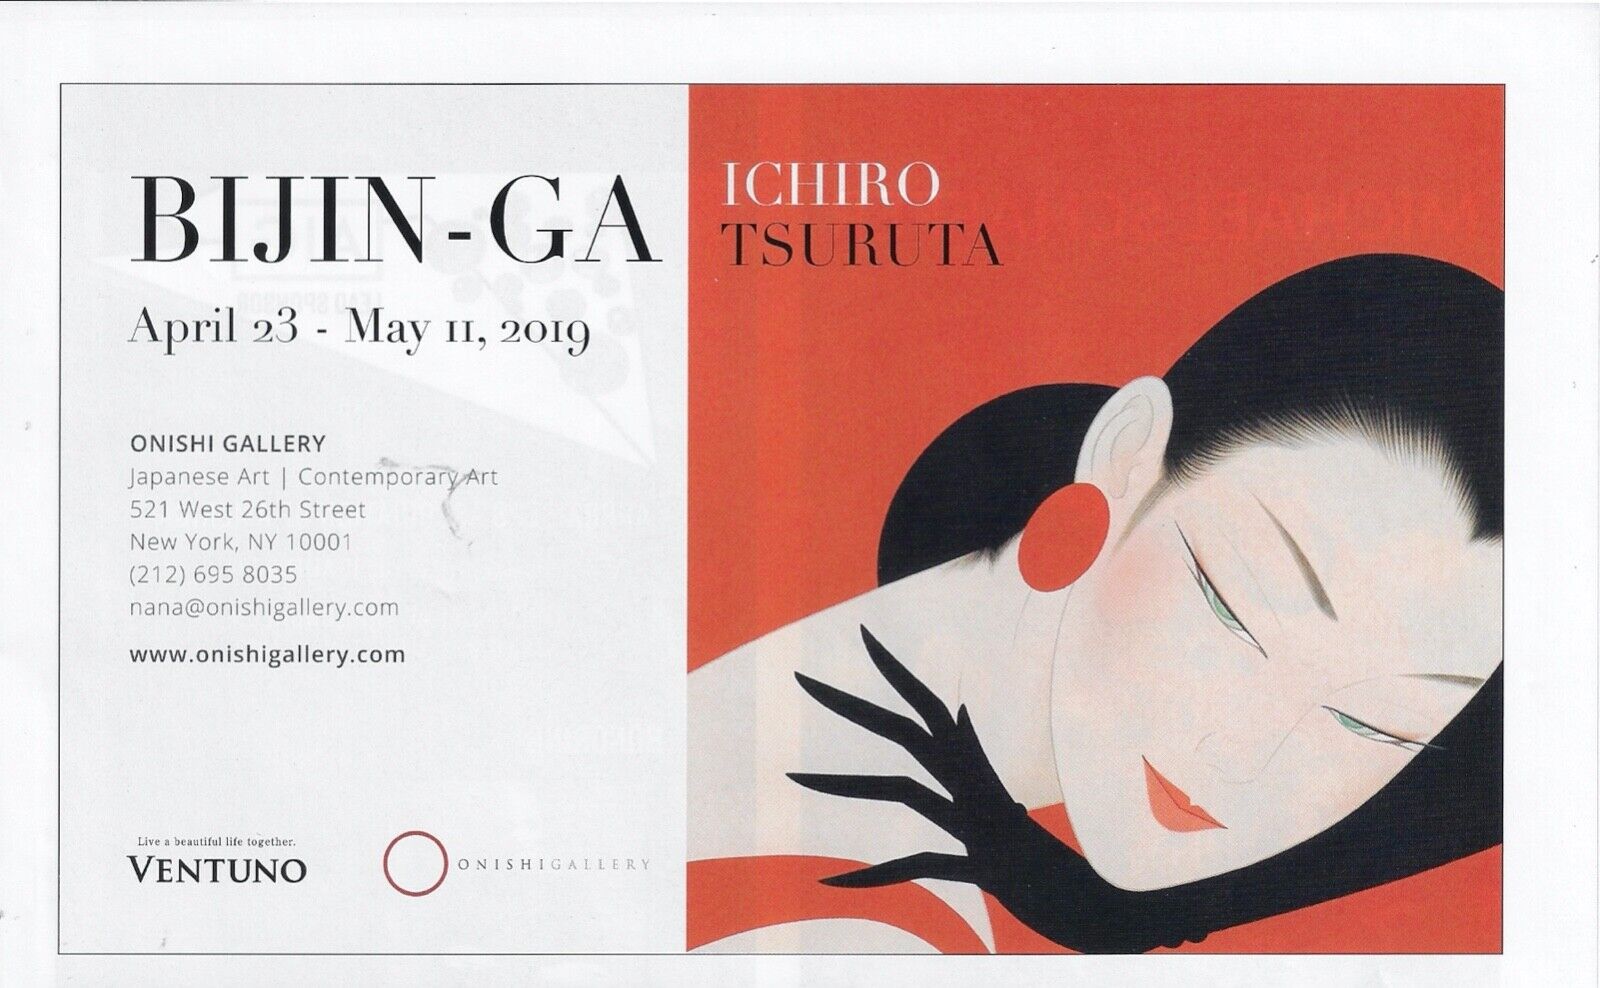 ICHIRO TSURUTA Bijin-Ga Art Gallery Exhibit Print Ad~2019